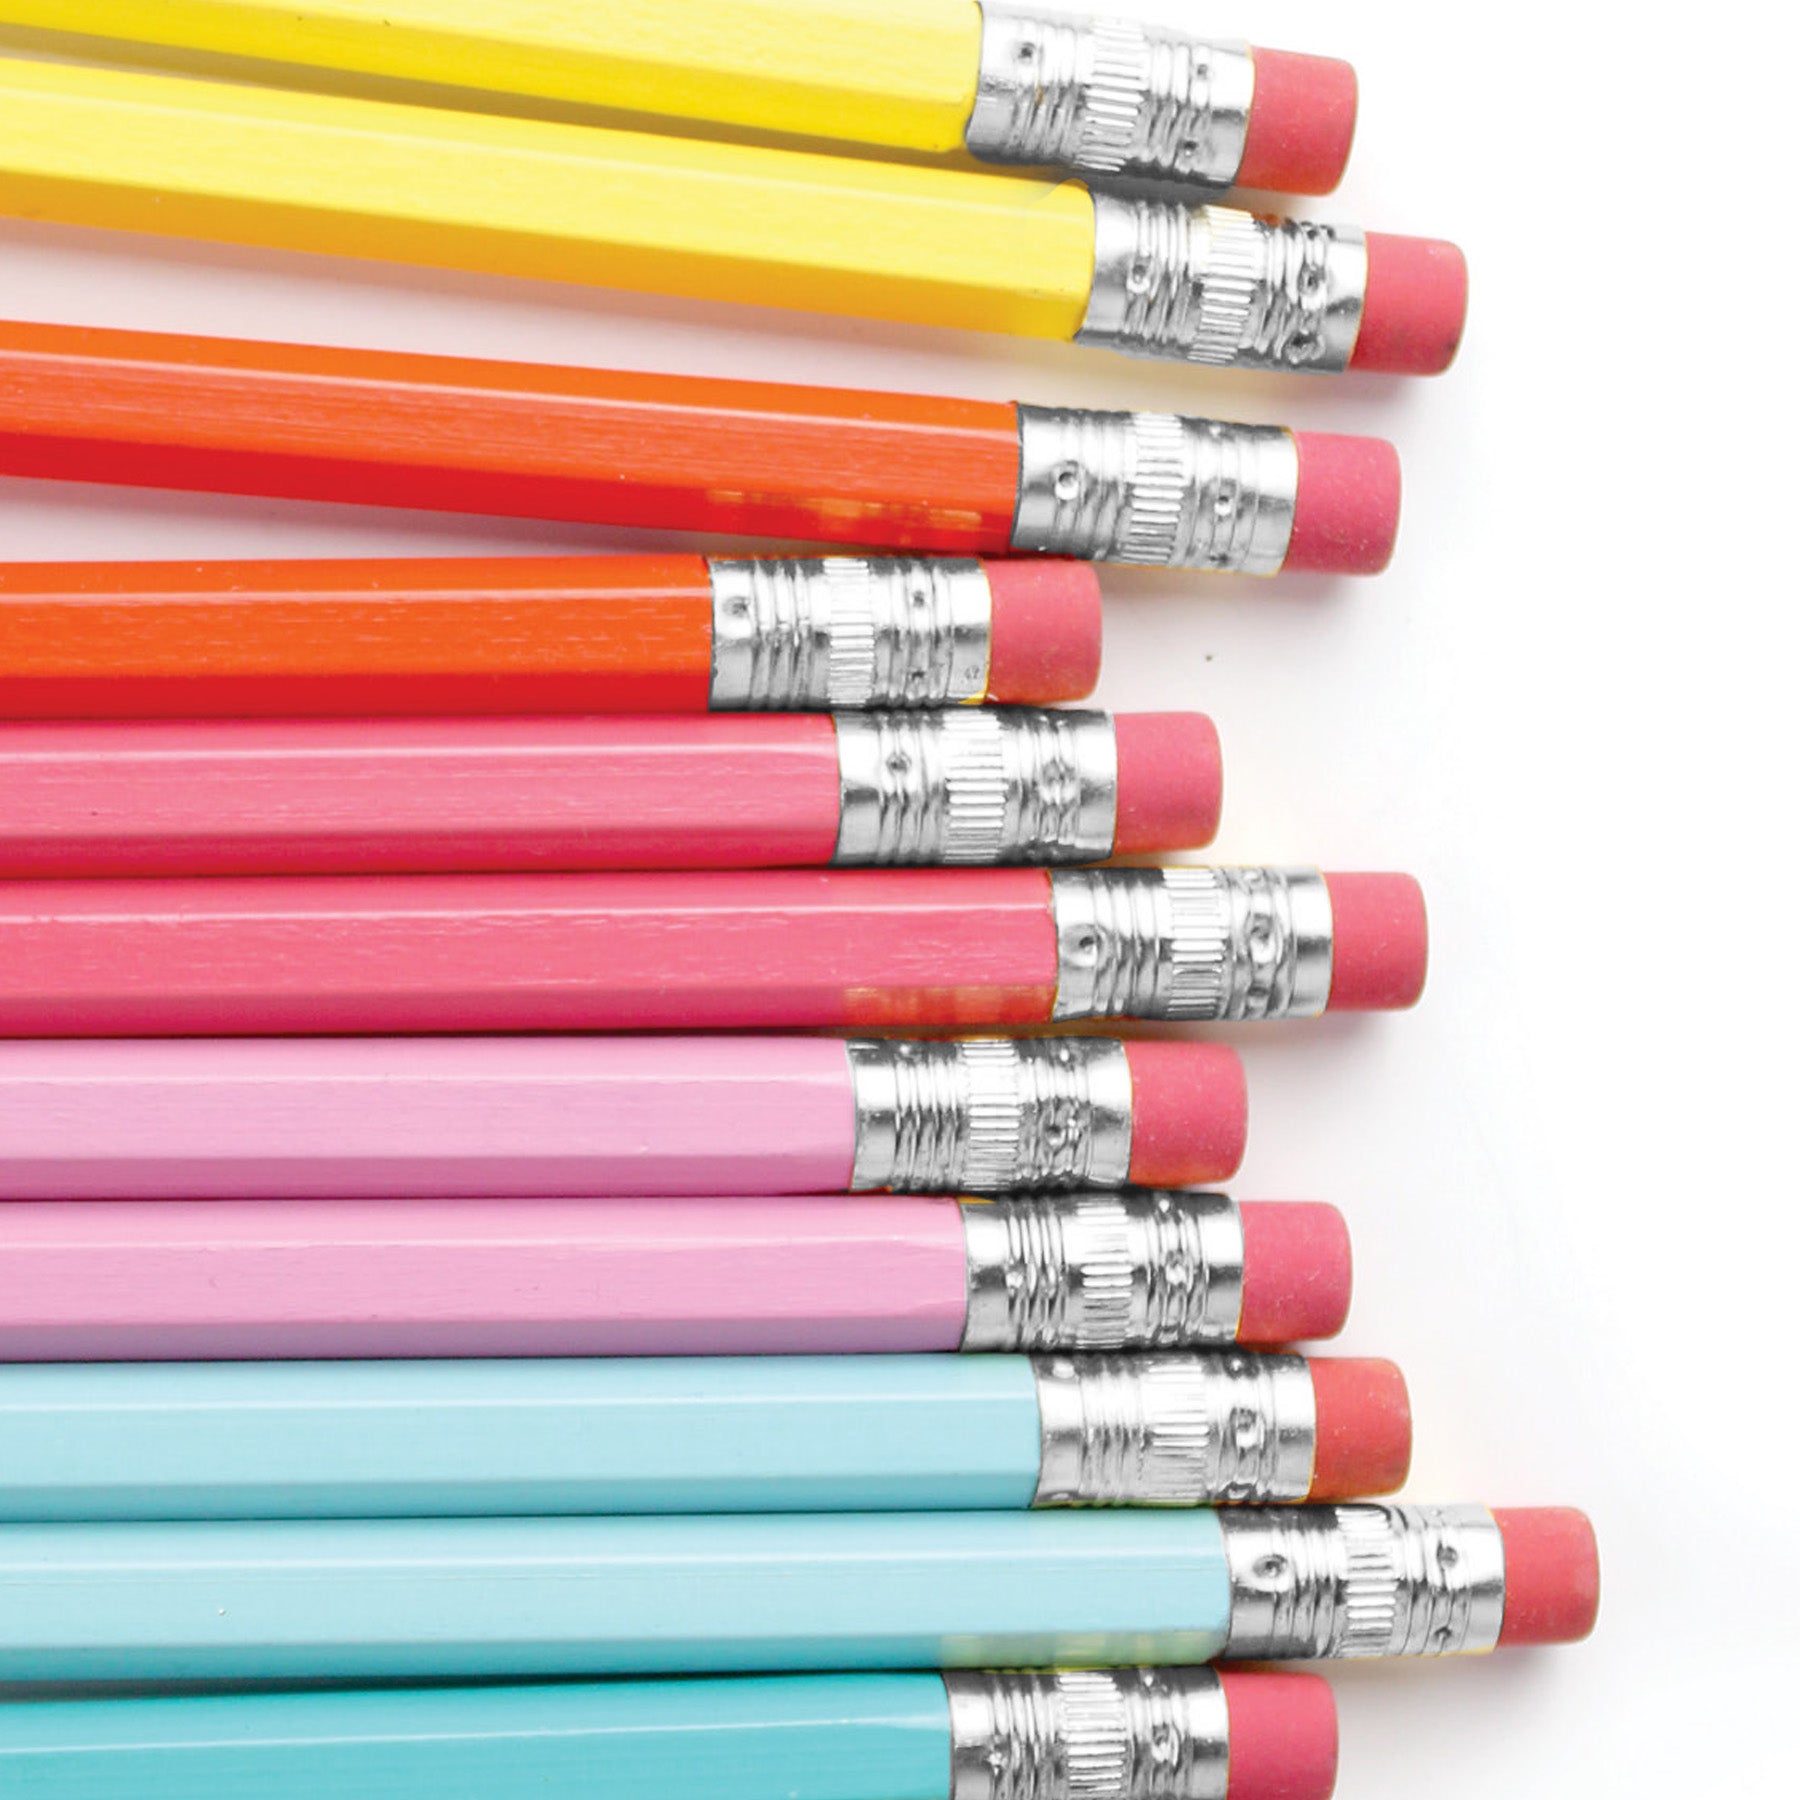 Rainbow Writer Pencils